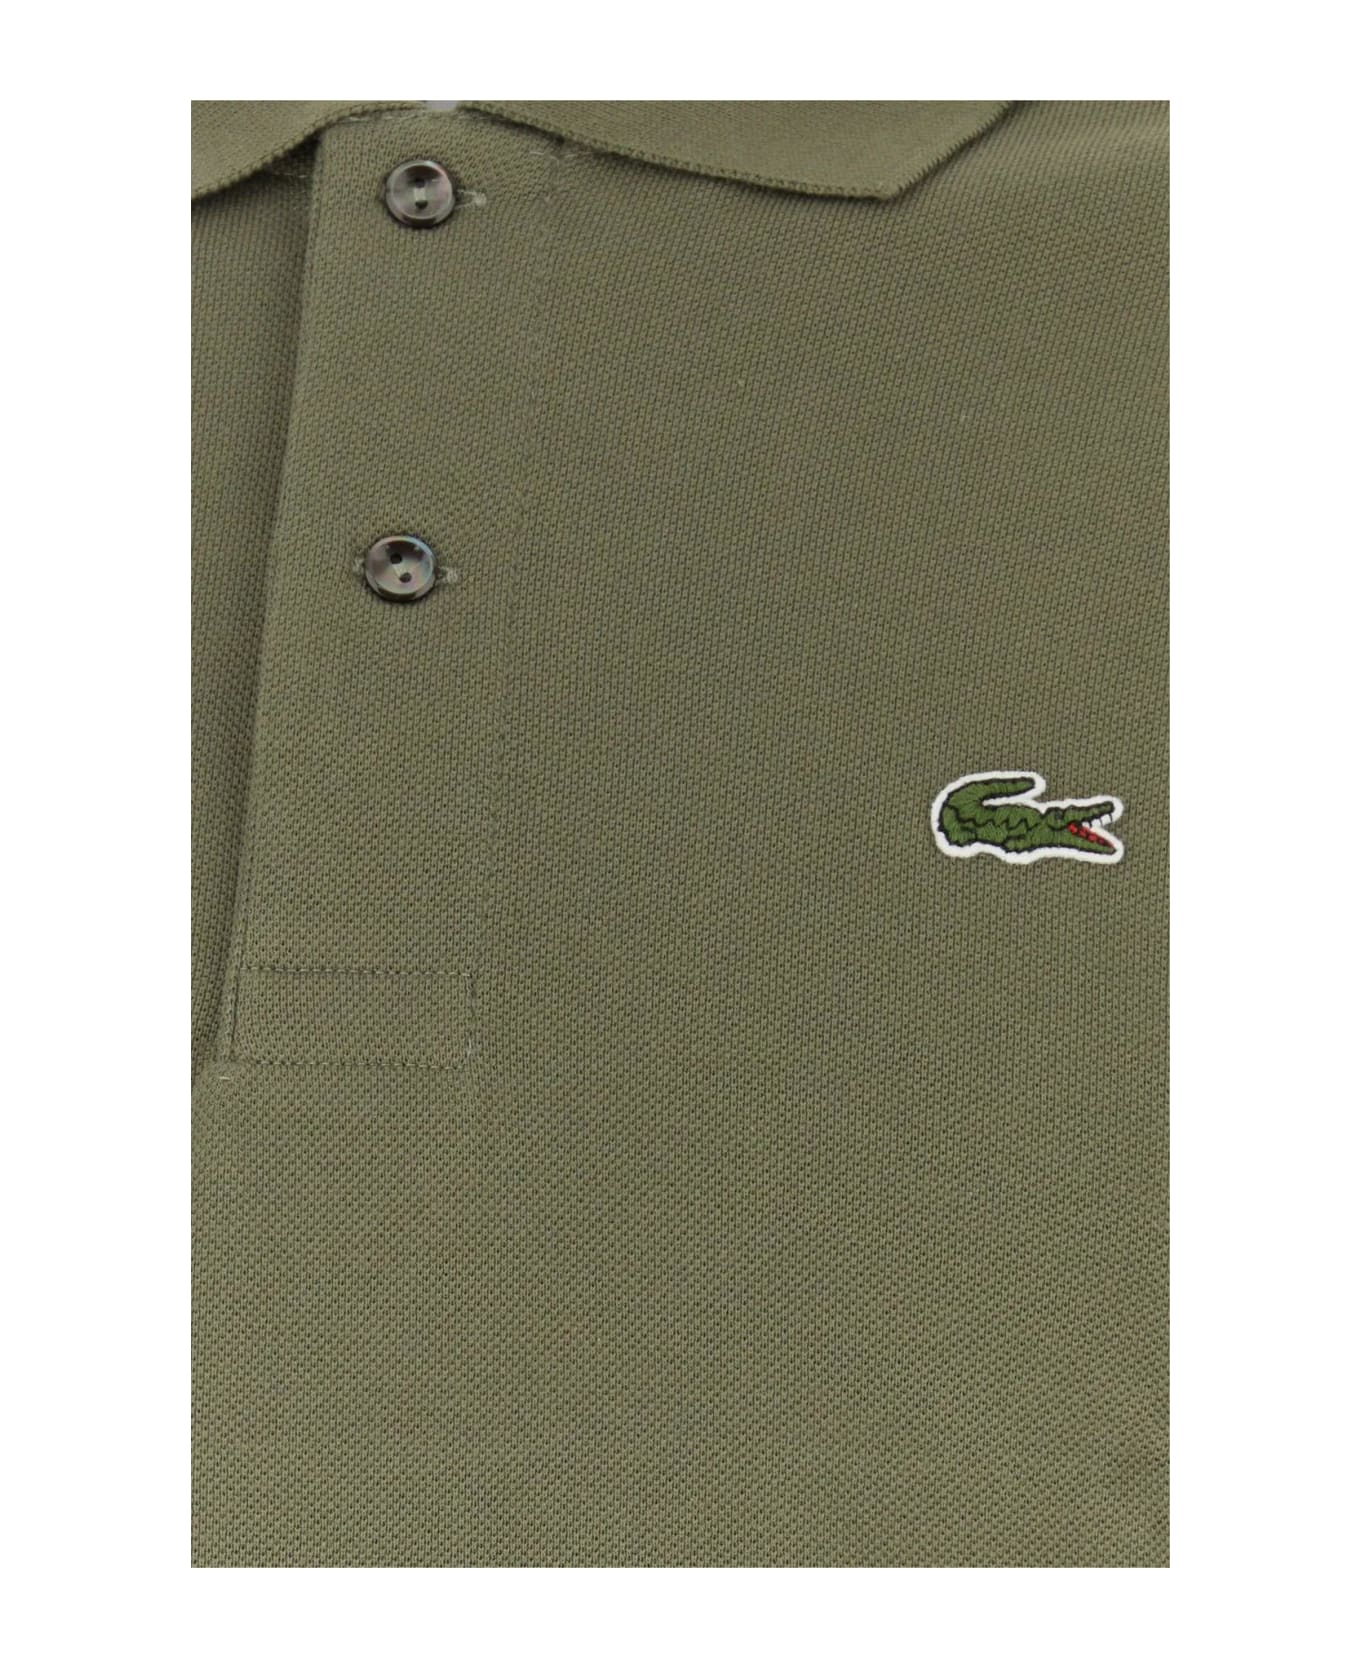 Lacoste Army Green Piquet Polo Shirt - Khaki